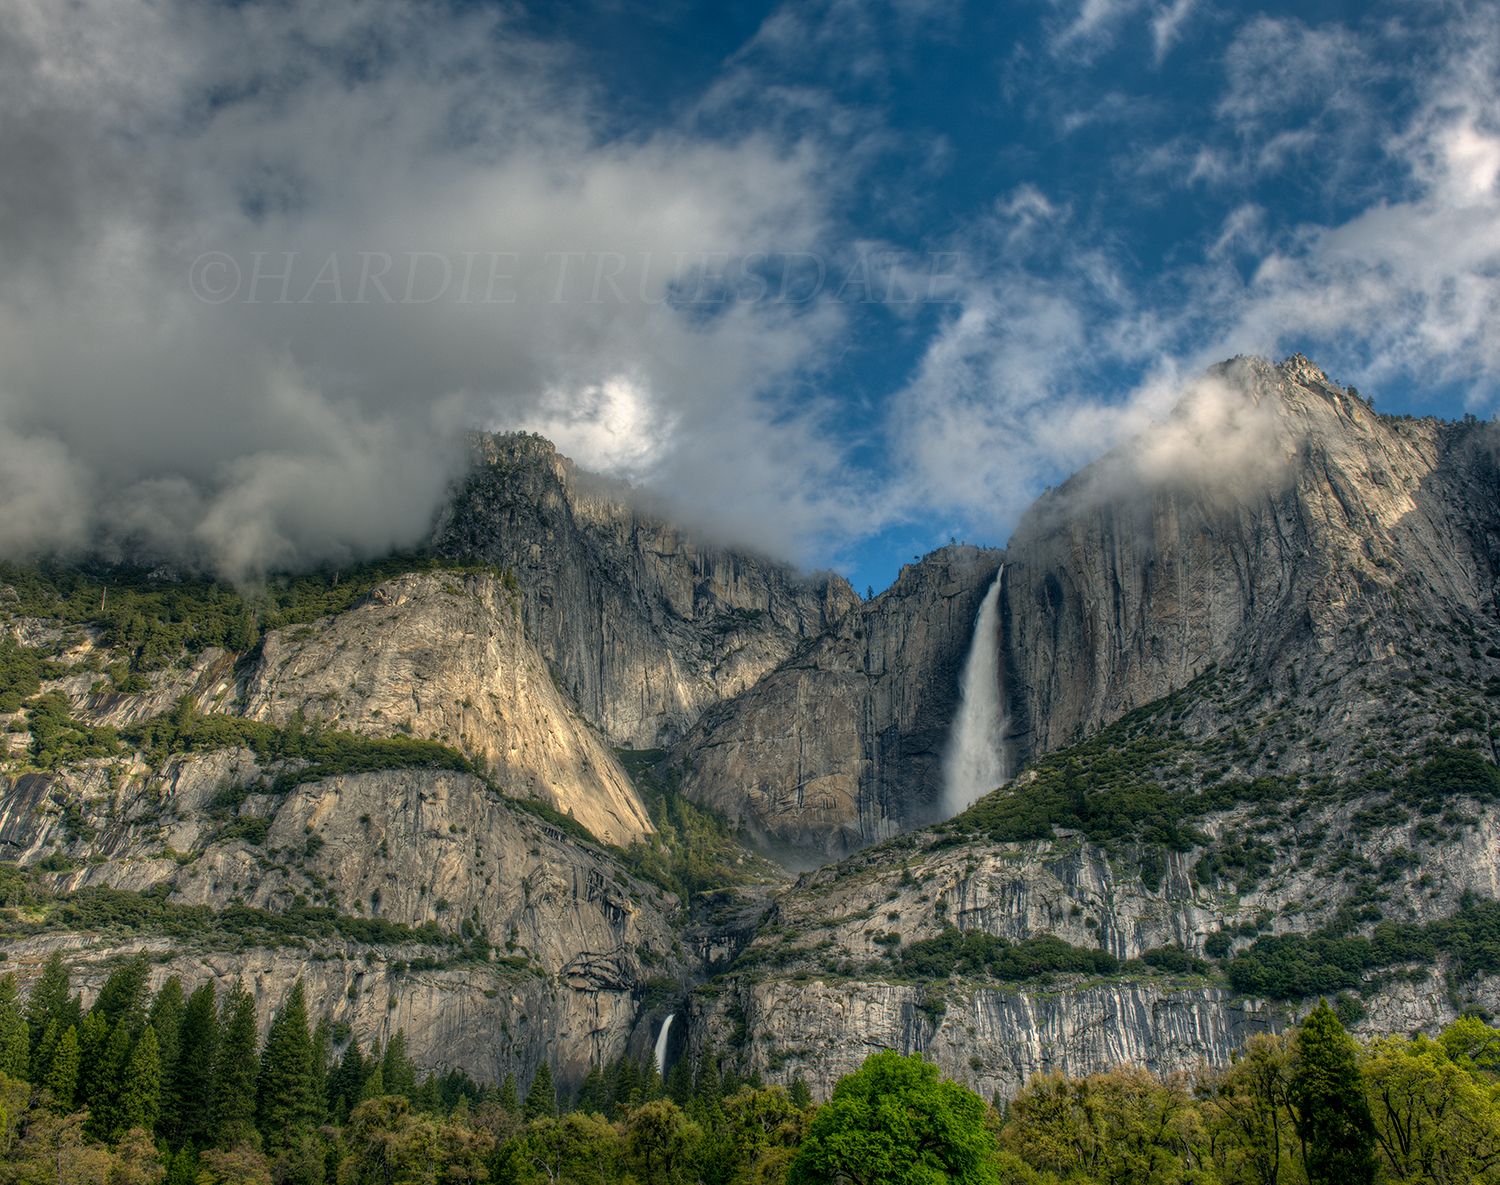 CA#131 "Yosemite Falls"